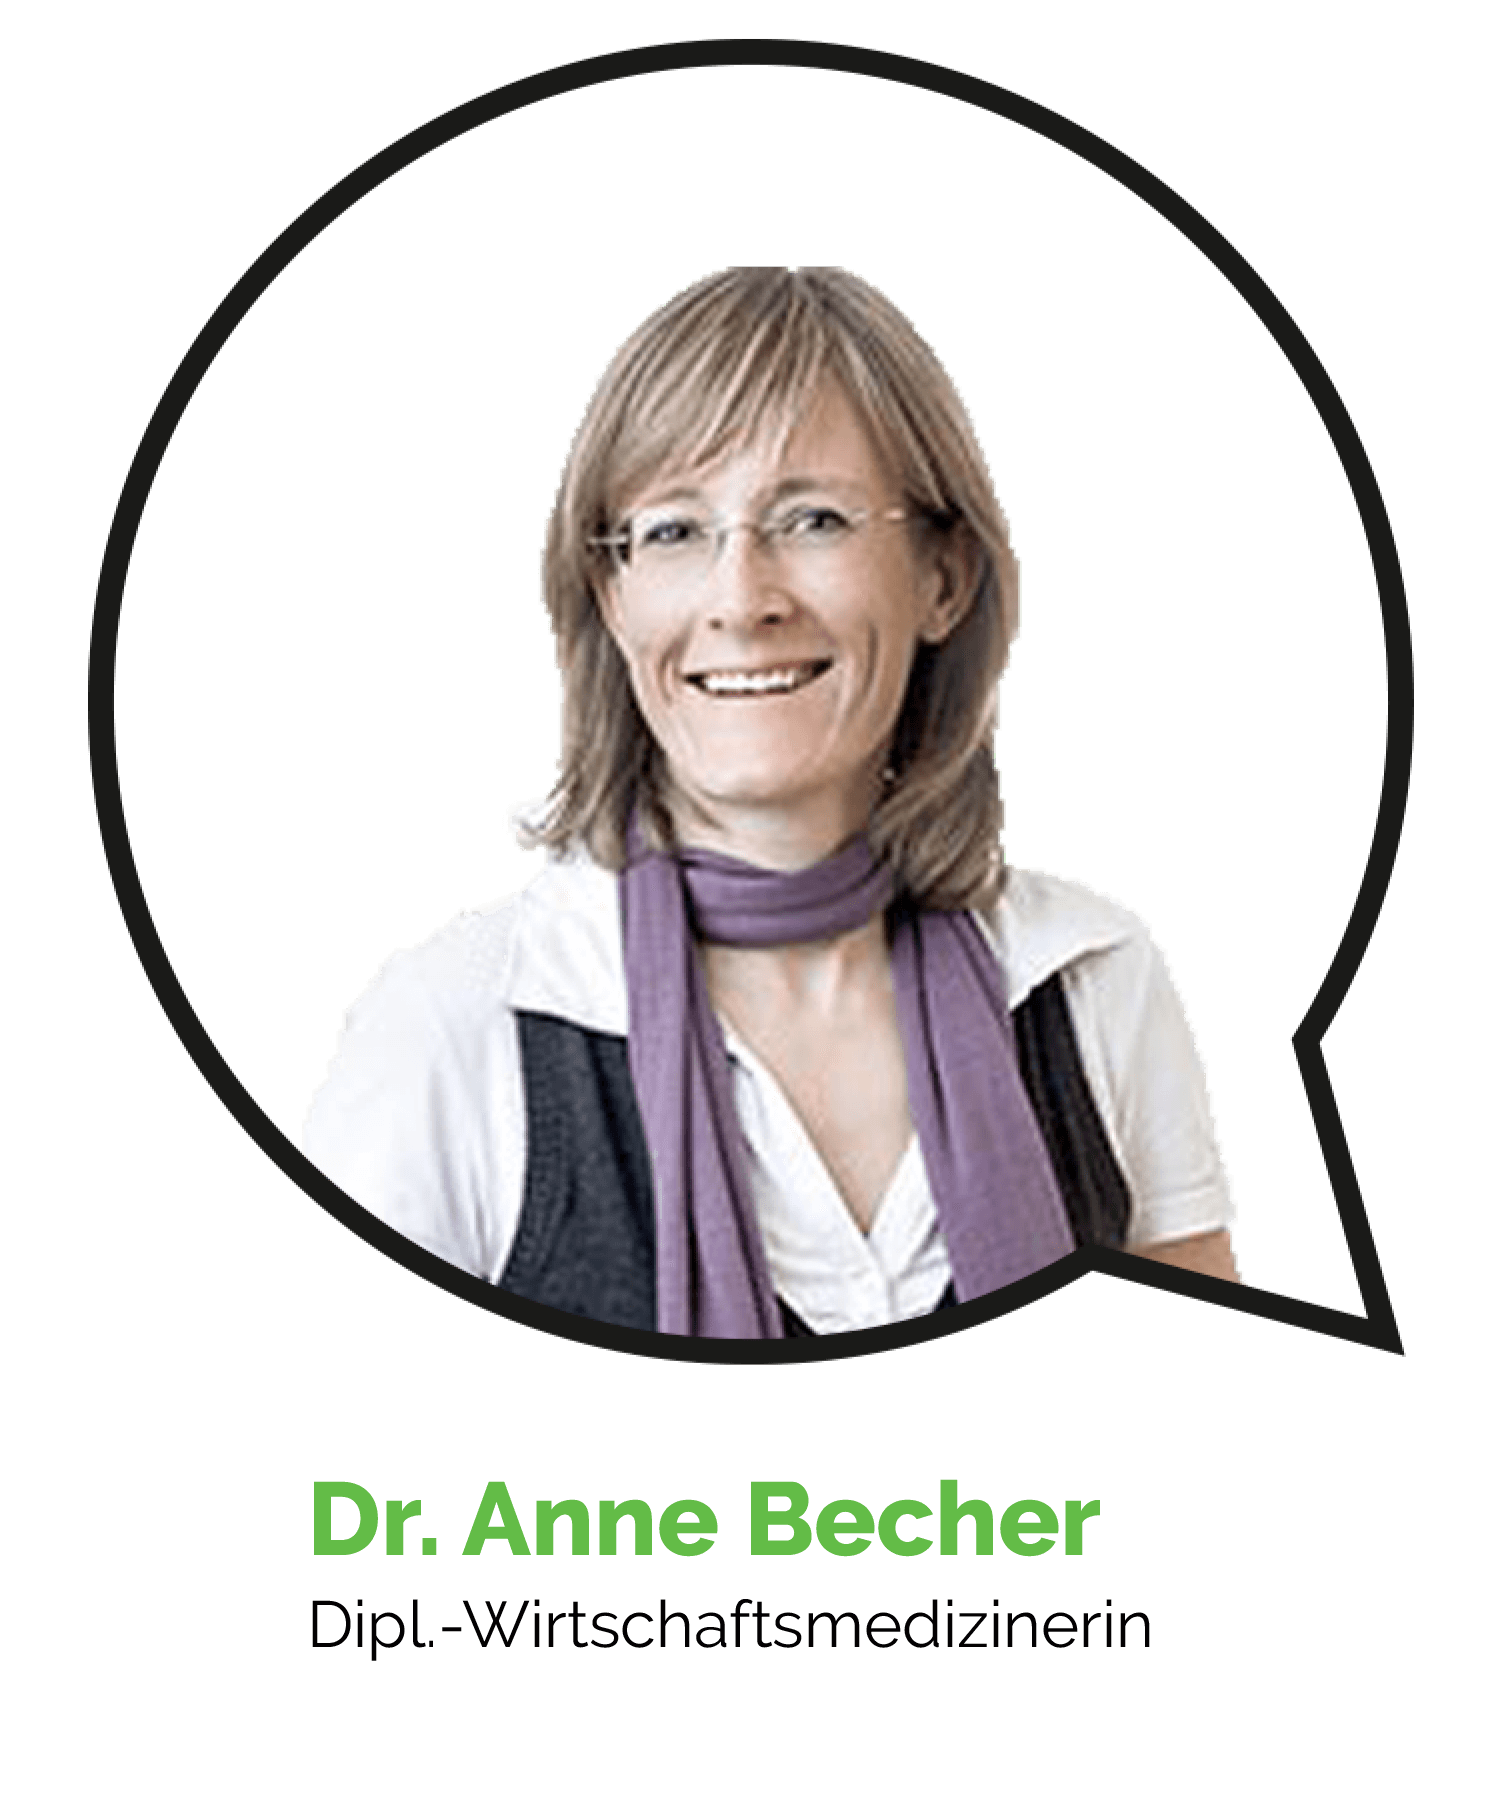 Dr. Anne Becher